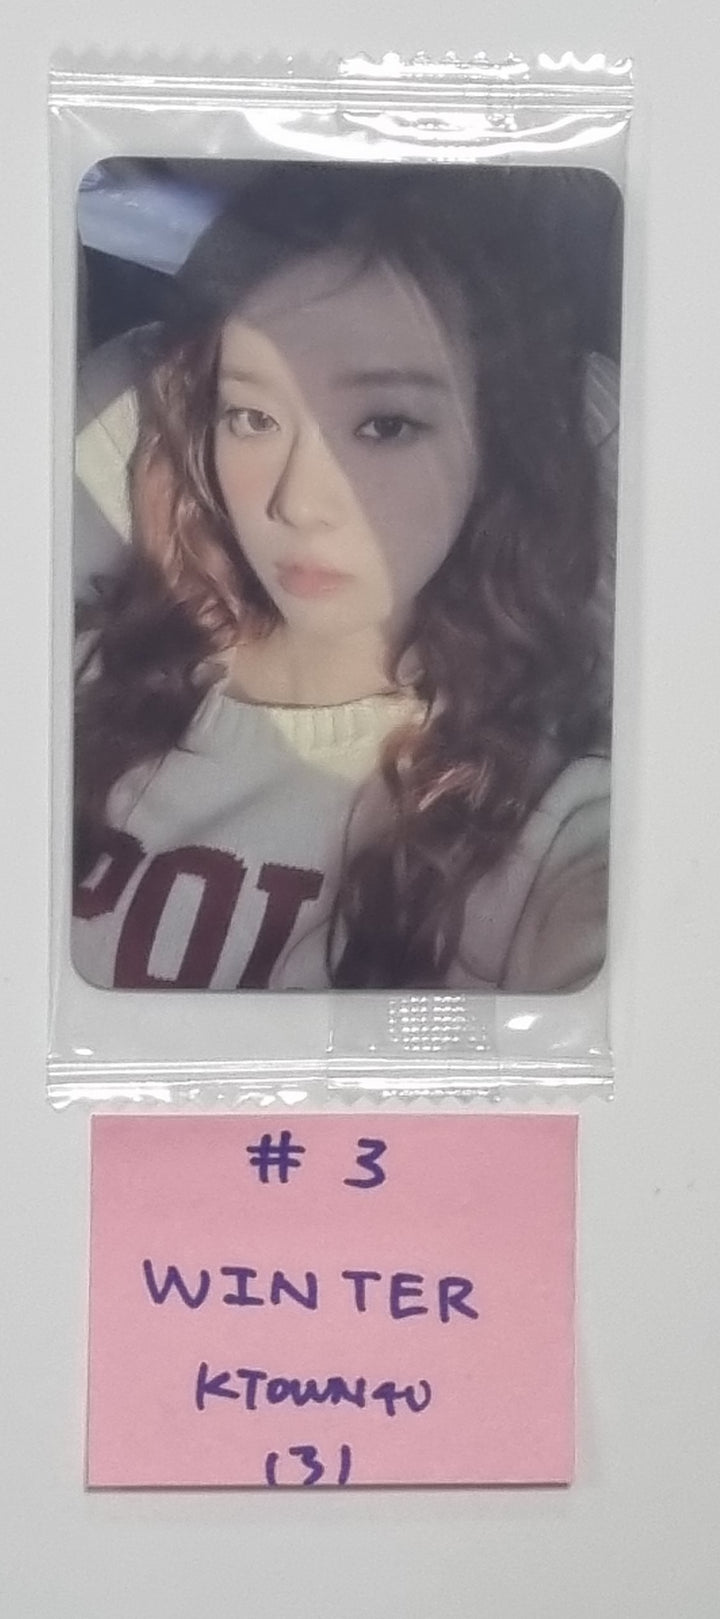 Aespa "Drama" 4th Mini - Ktown4U Pre-Order Benefit Photocard [Giant Ver.] [23.11.21]